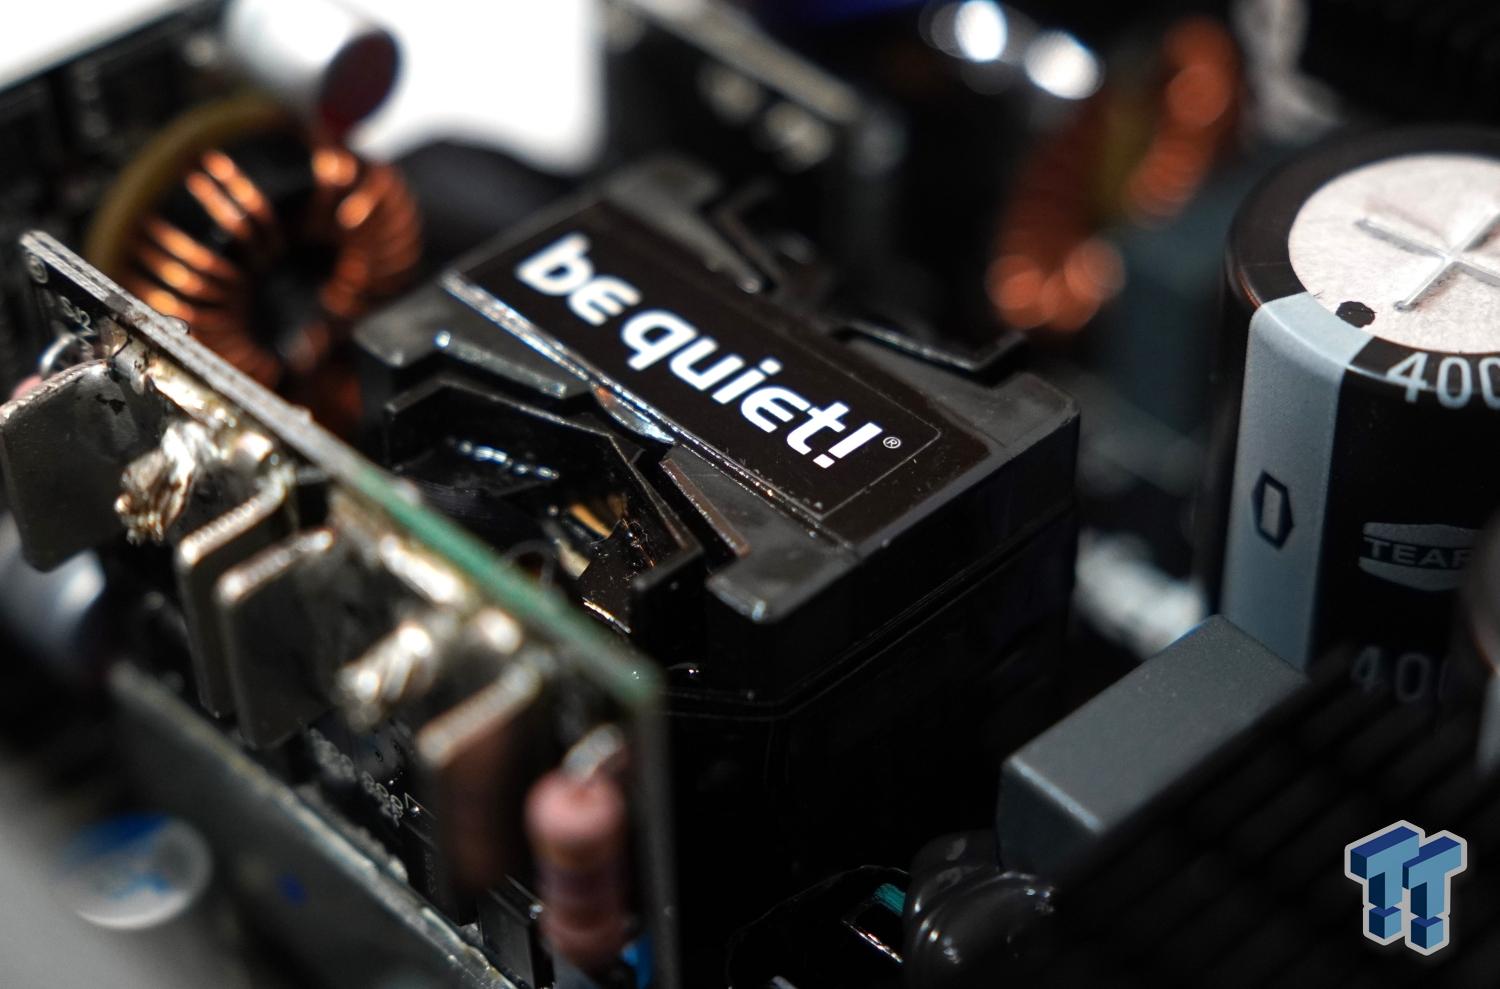 be quiet! Pure Power 12 M 750W ATX 3.0 Power Supply | 80+ Gold Efficiency |  PCIe 5.0 | 2 12V-rails | Overclocking GPU Support | Modular PSU | 10 Year